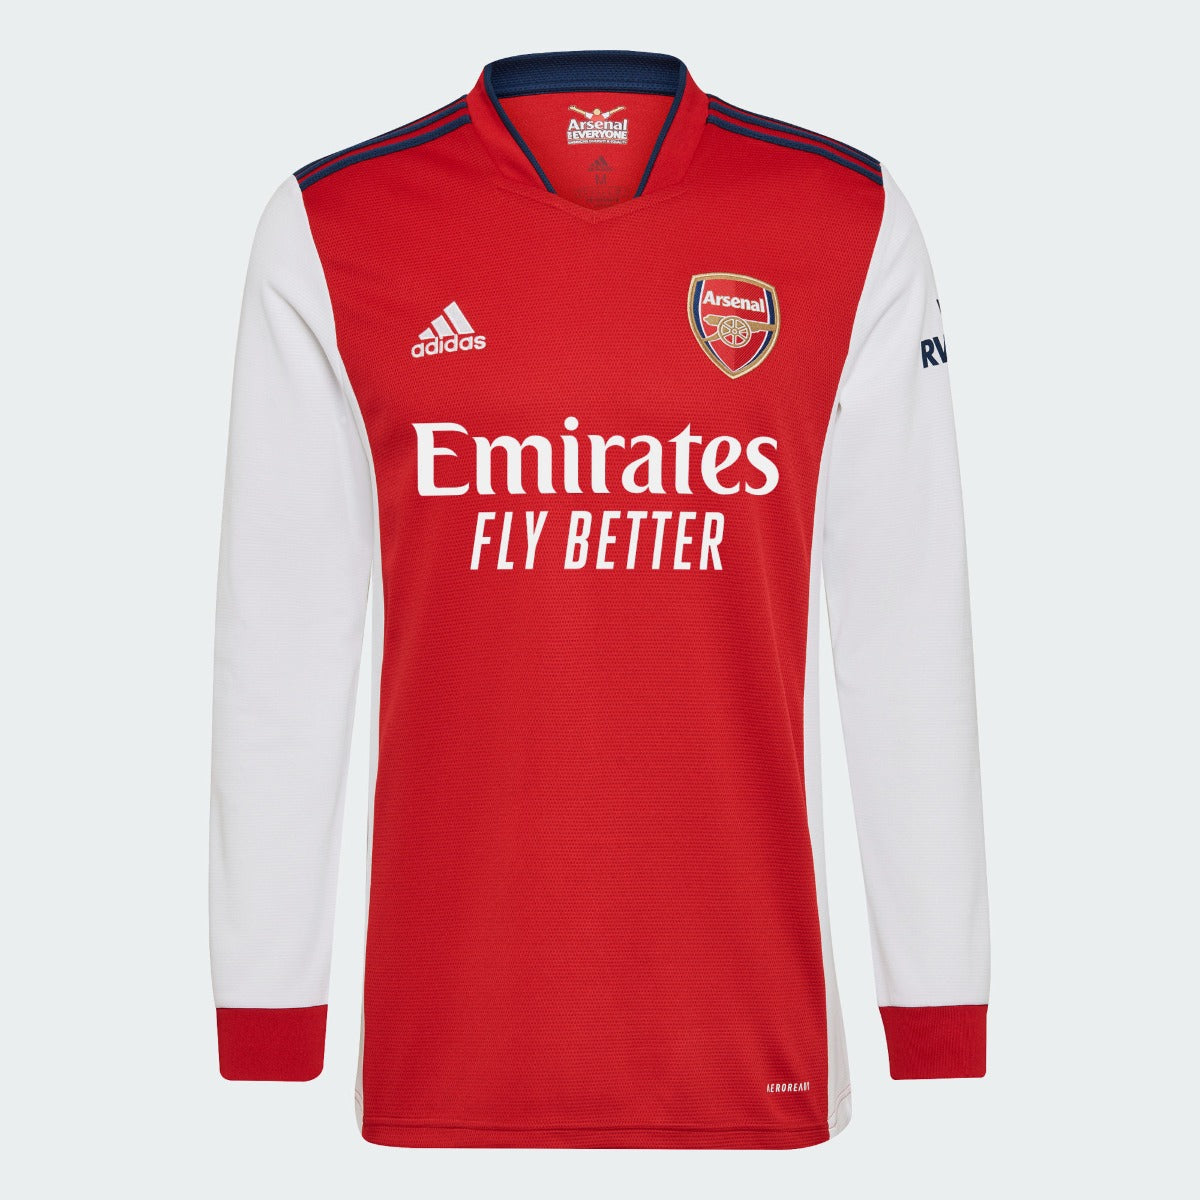 Adidas, Maglia a maniche lunghe Adidas 2021-22 Arsenal Home - Scarlet-White